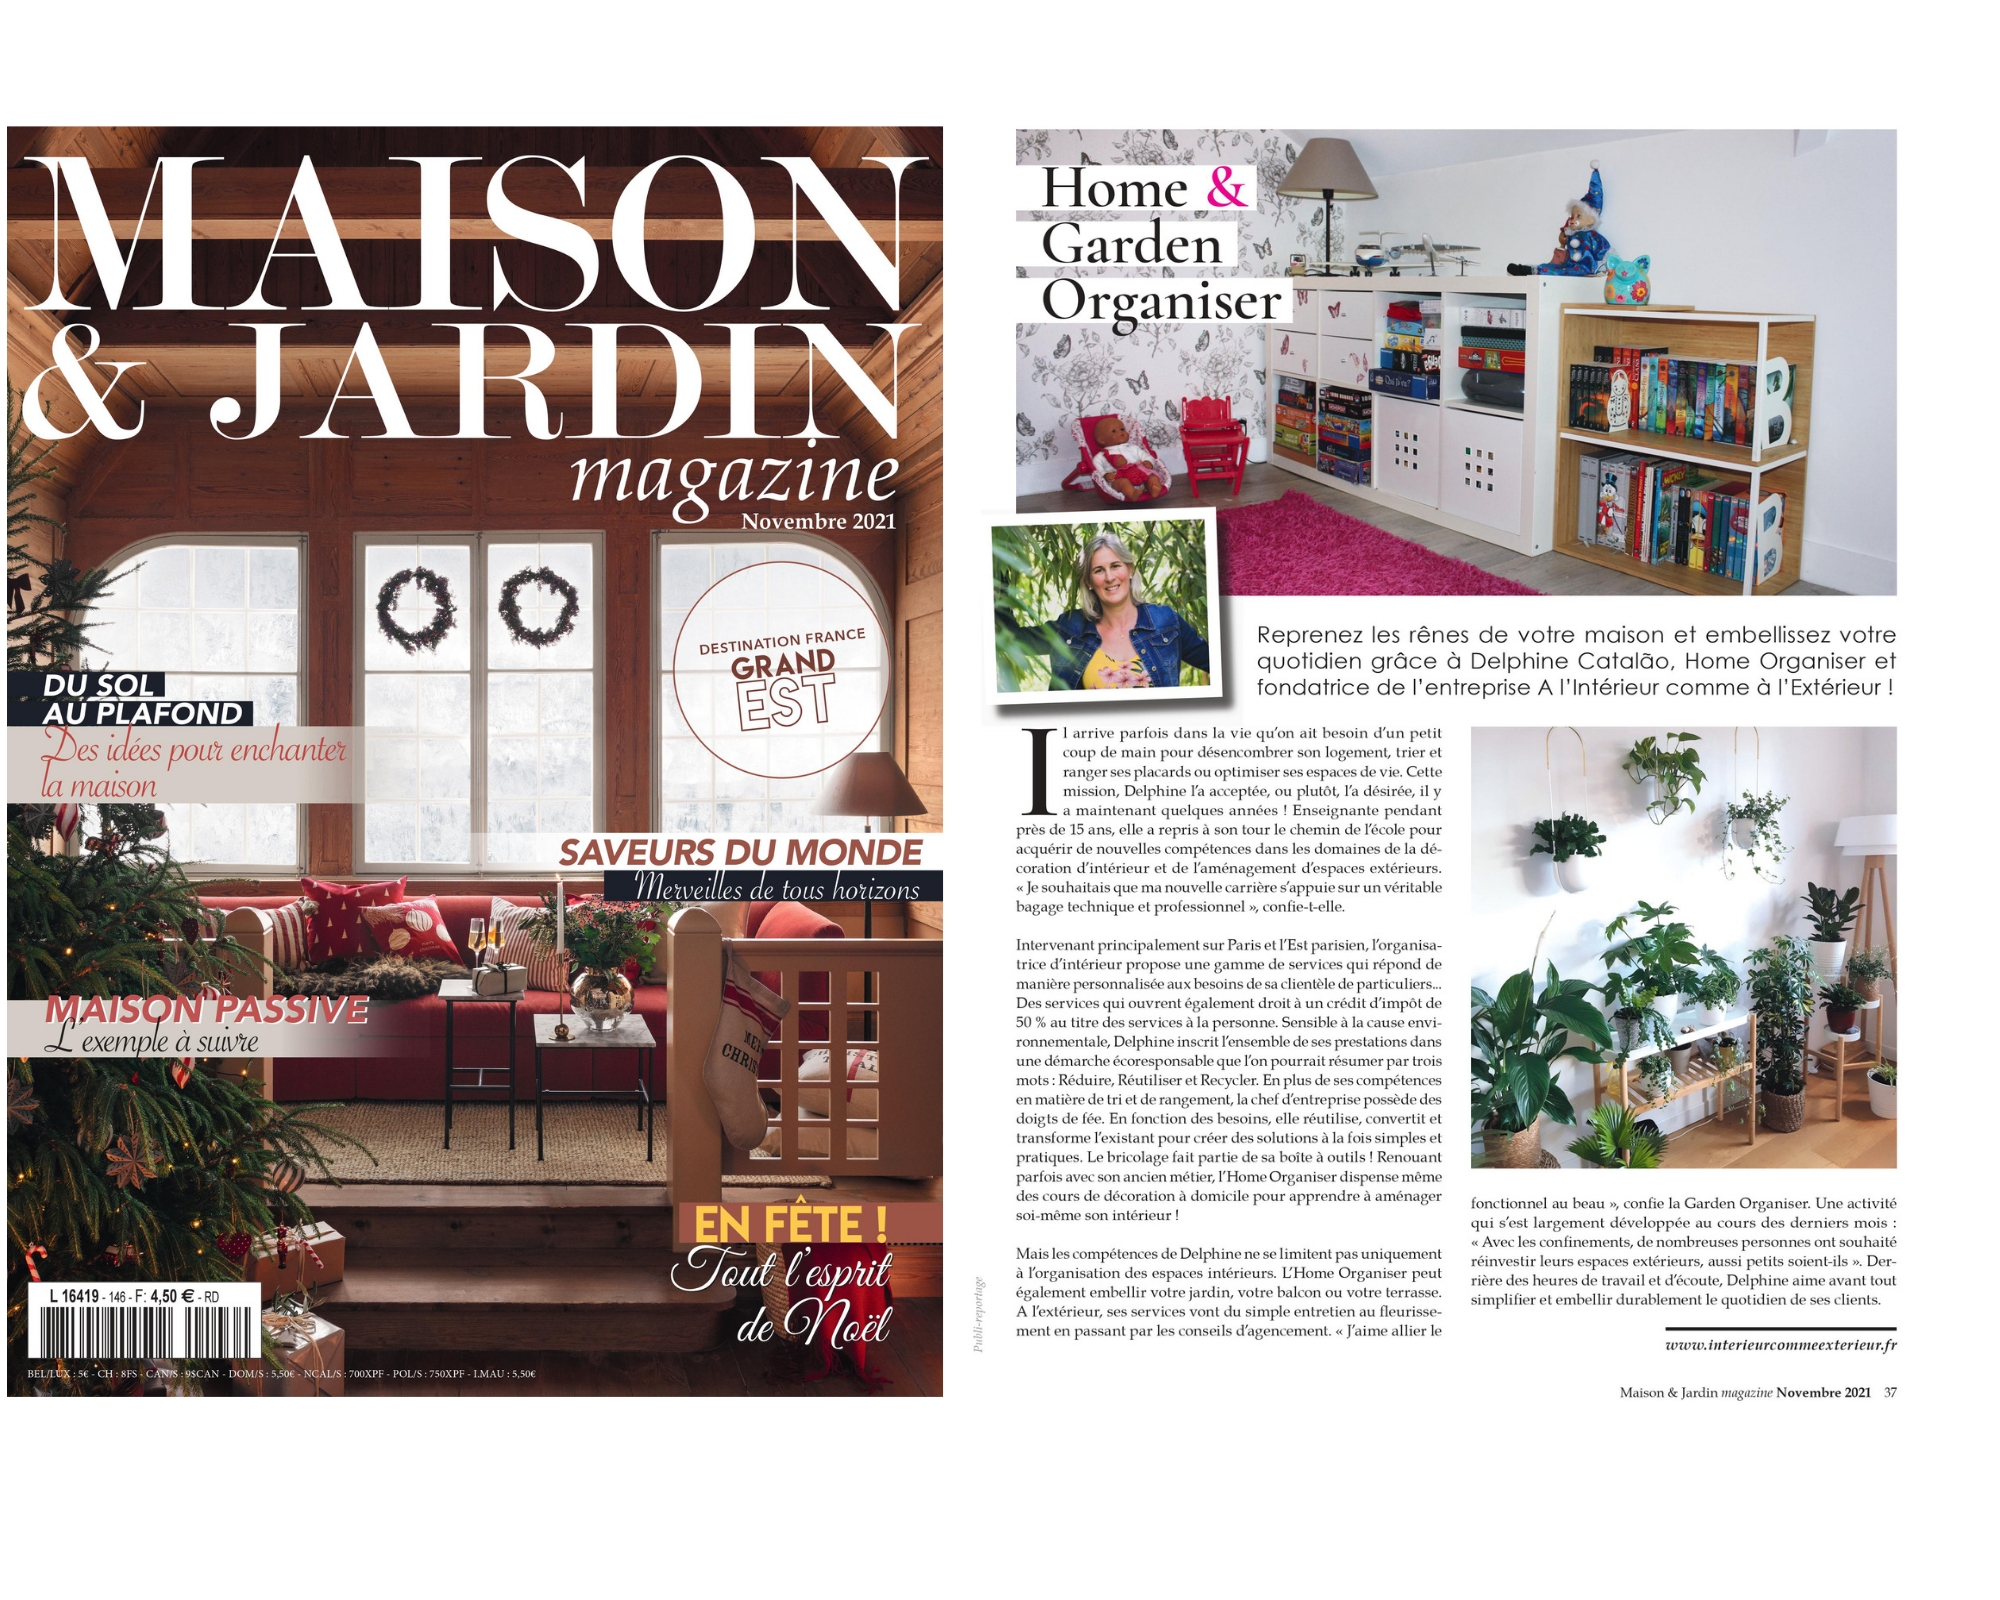 Parution dans Maison & Jardin magazine - Home and garden Organiser